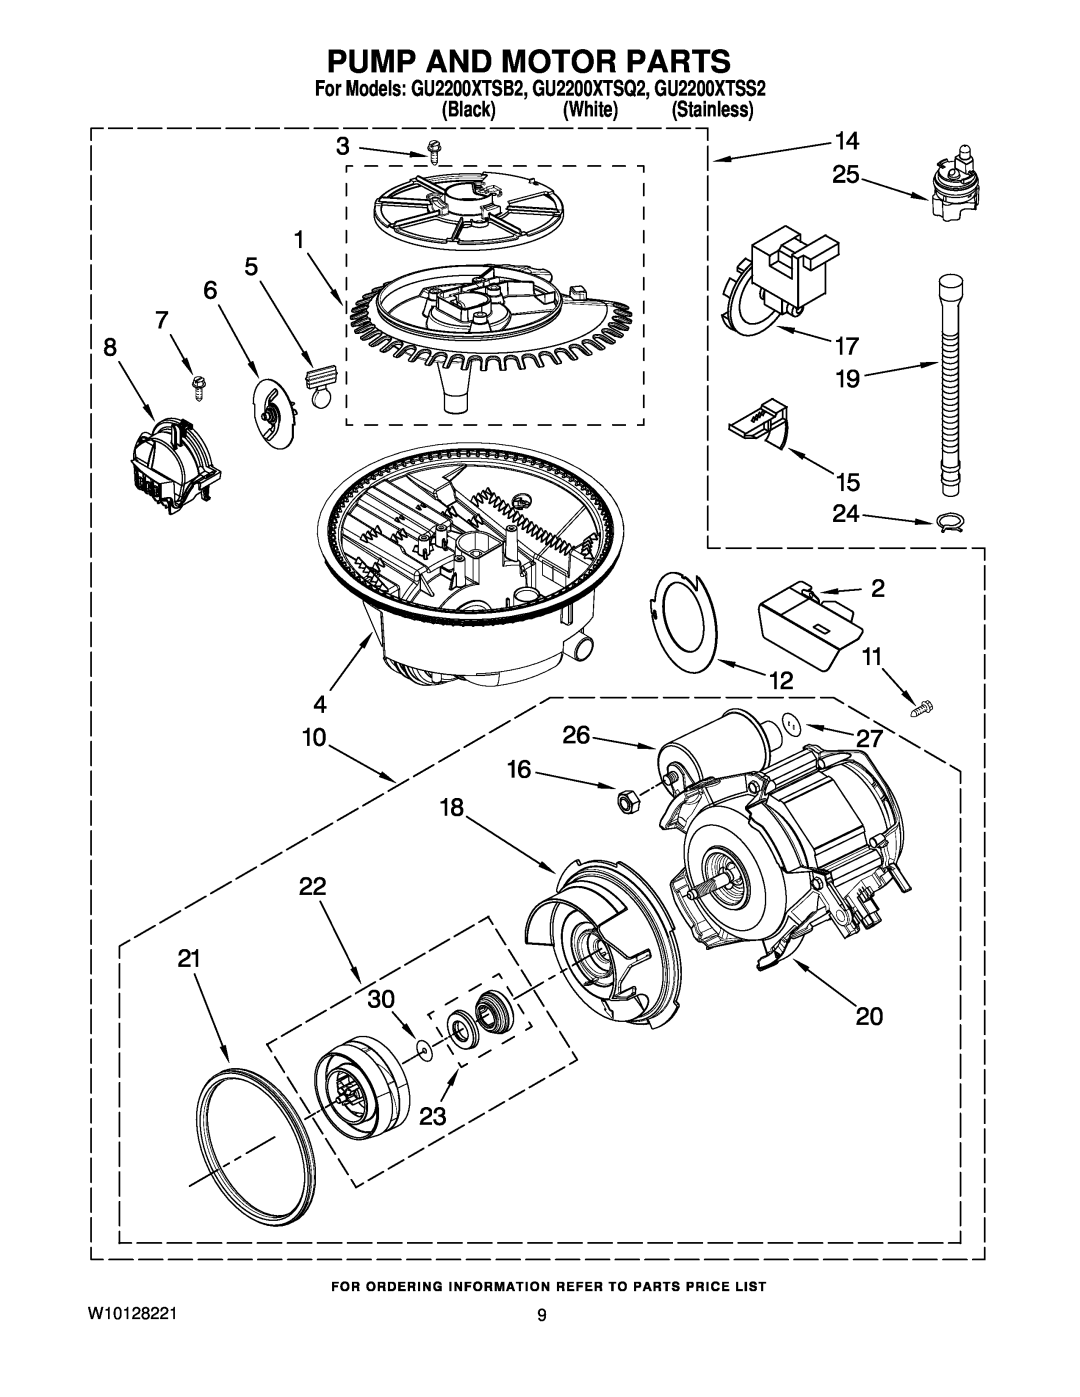 Whirlpool manual Pump And Motor Parts, For Models GU2200XTSB2, GU2200XTSQ2, GU2200XTSS2, Black White Stainless 